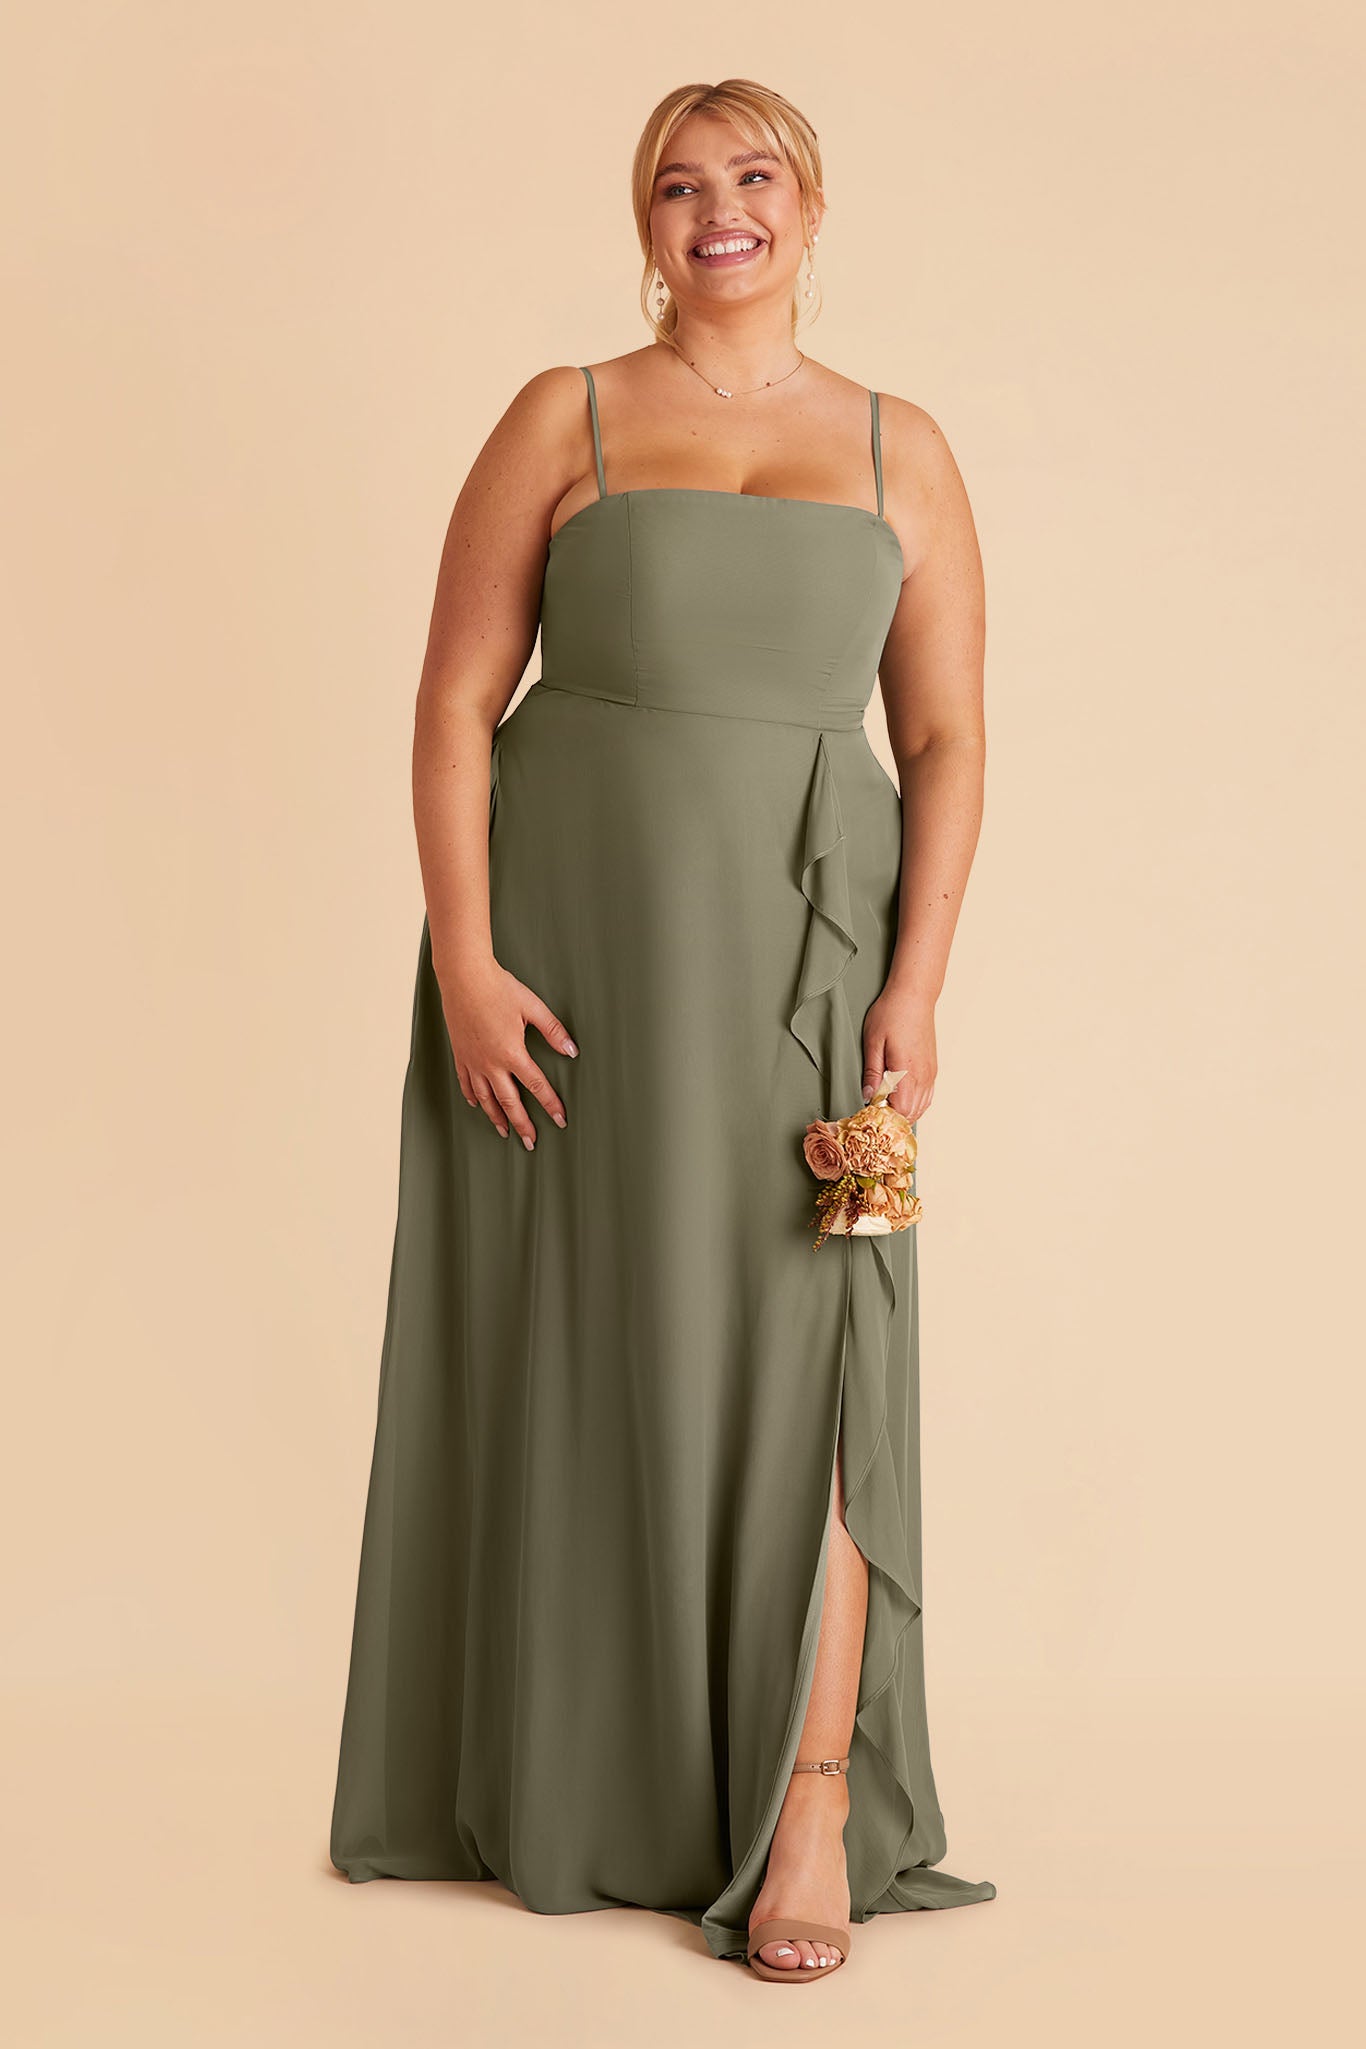 Moss Green Winnie Convertible Chiffon Dress by Birdy Grey